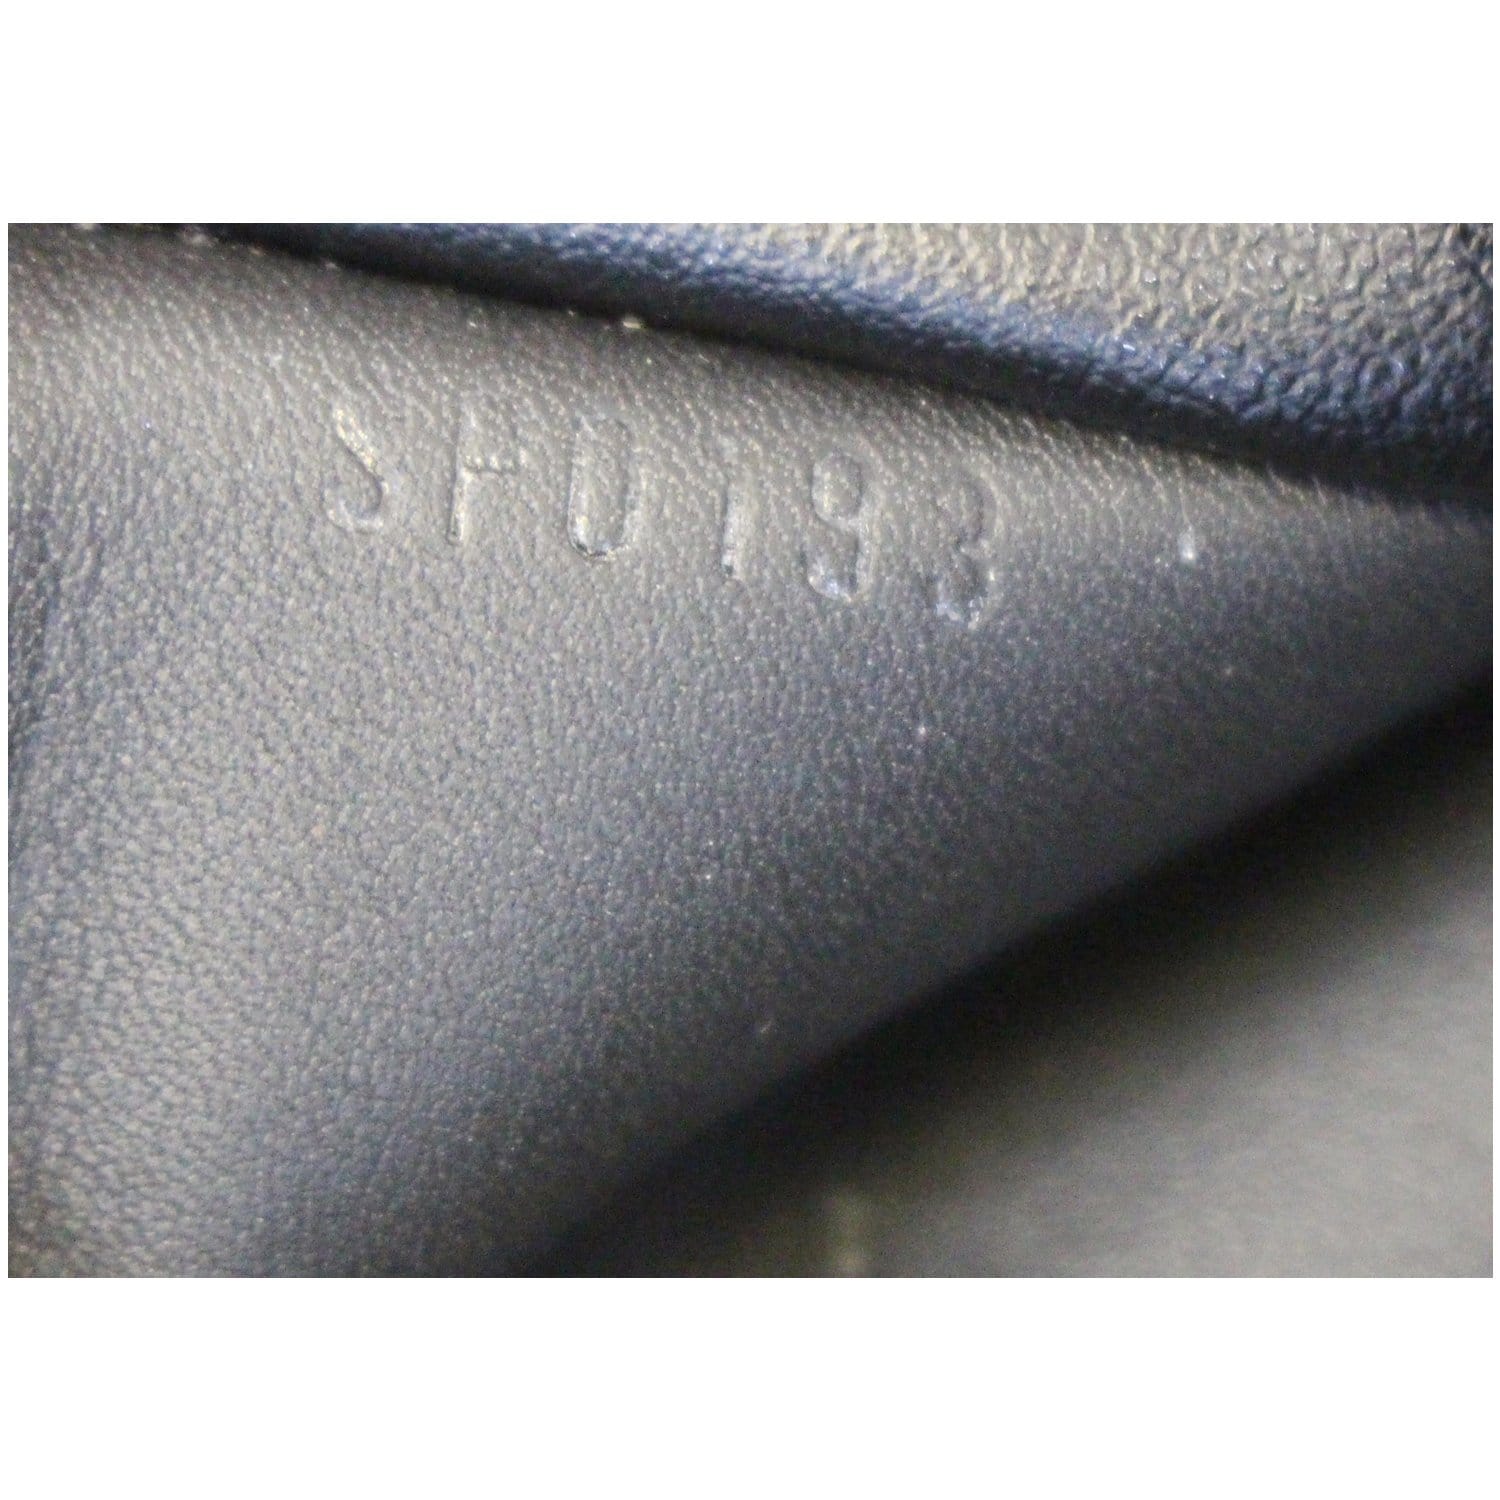 Louis Vuitton Damier Infini Leather Pocket Organizer/Wallet